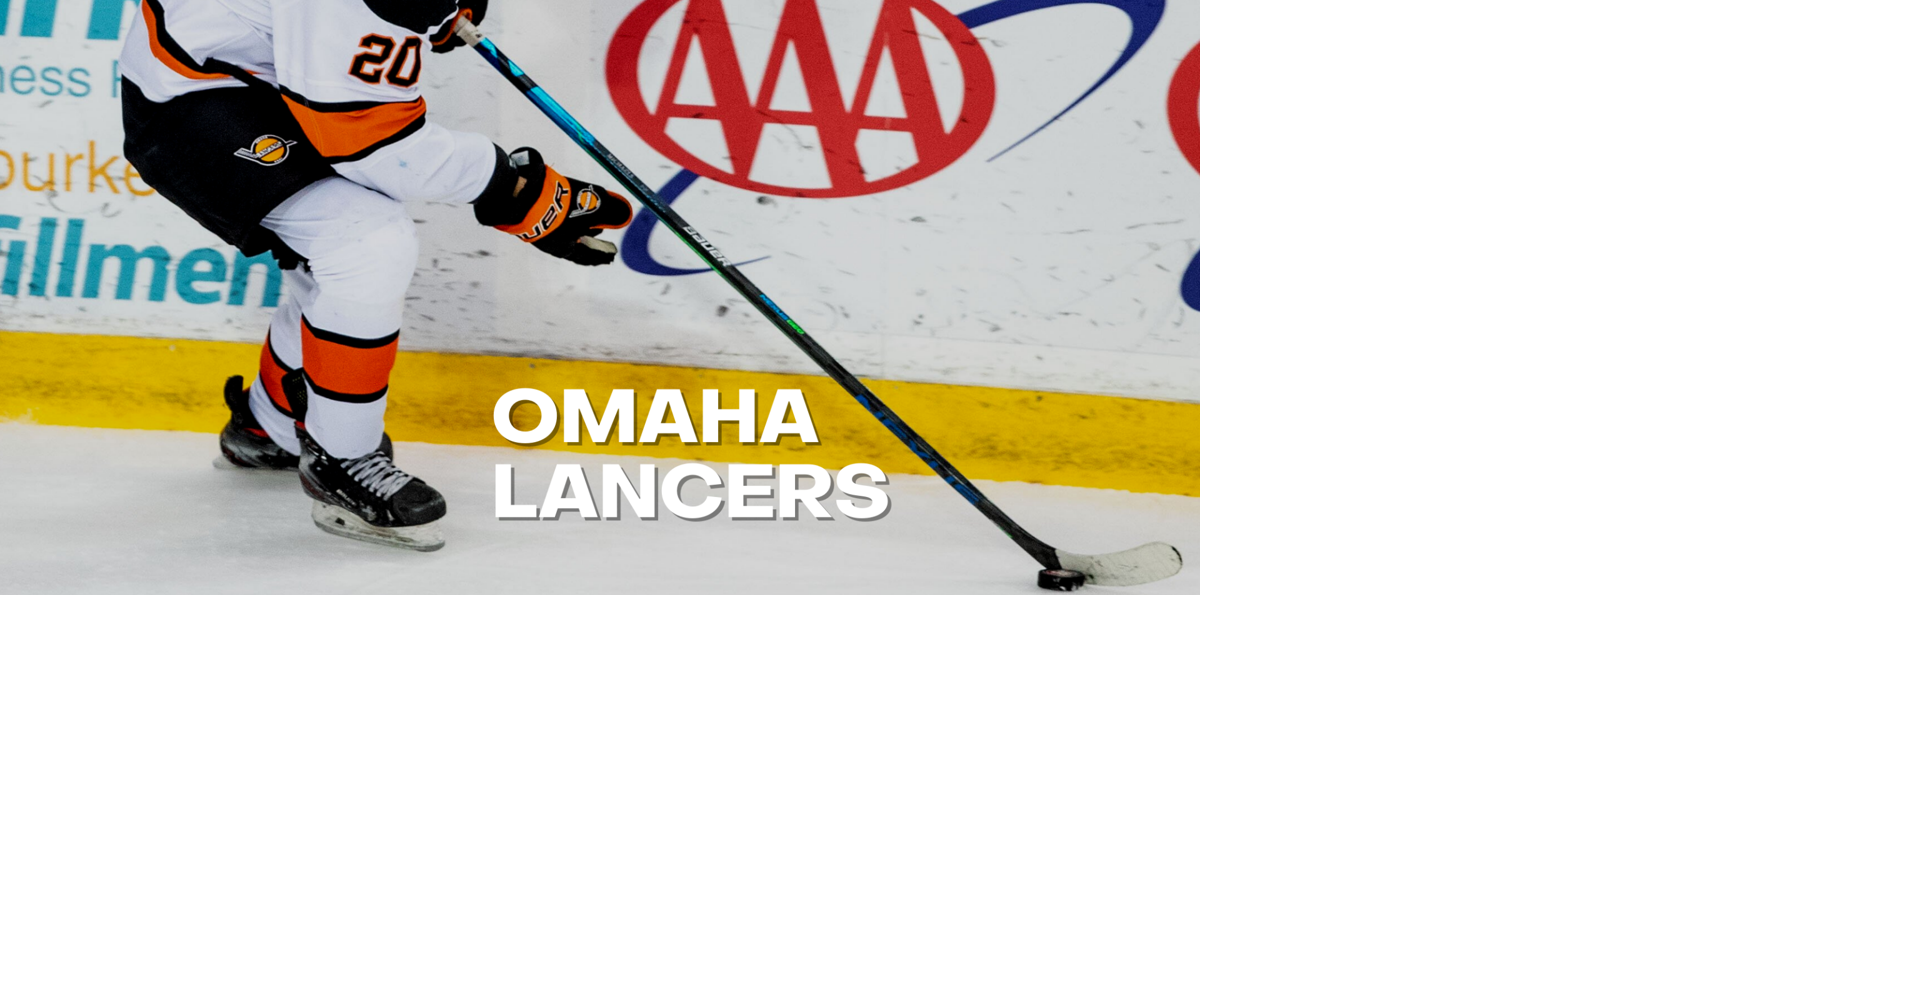 USHL investigation concludes Omaha Lancers did not violate standards